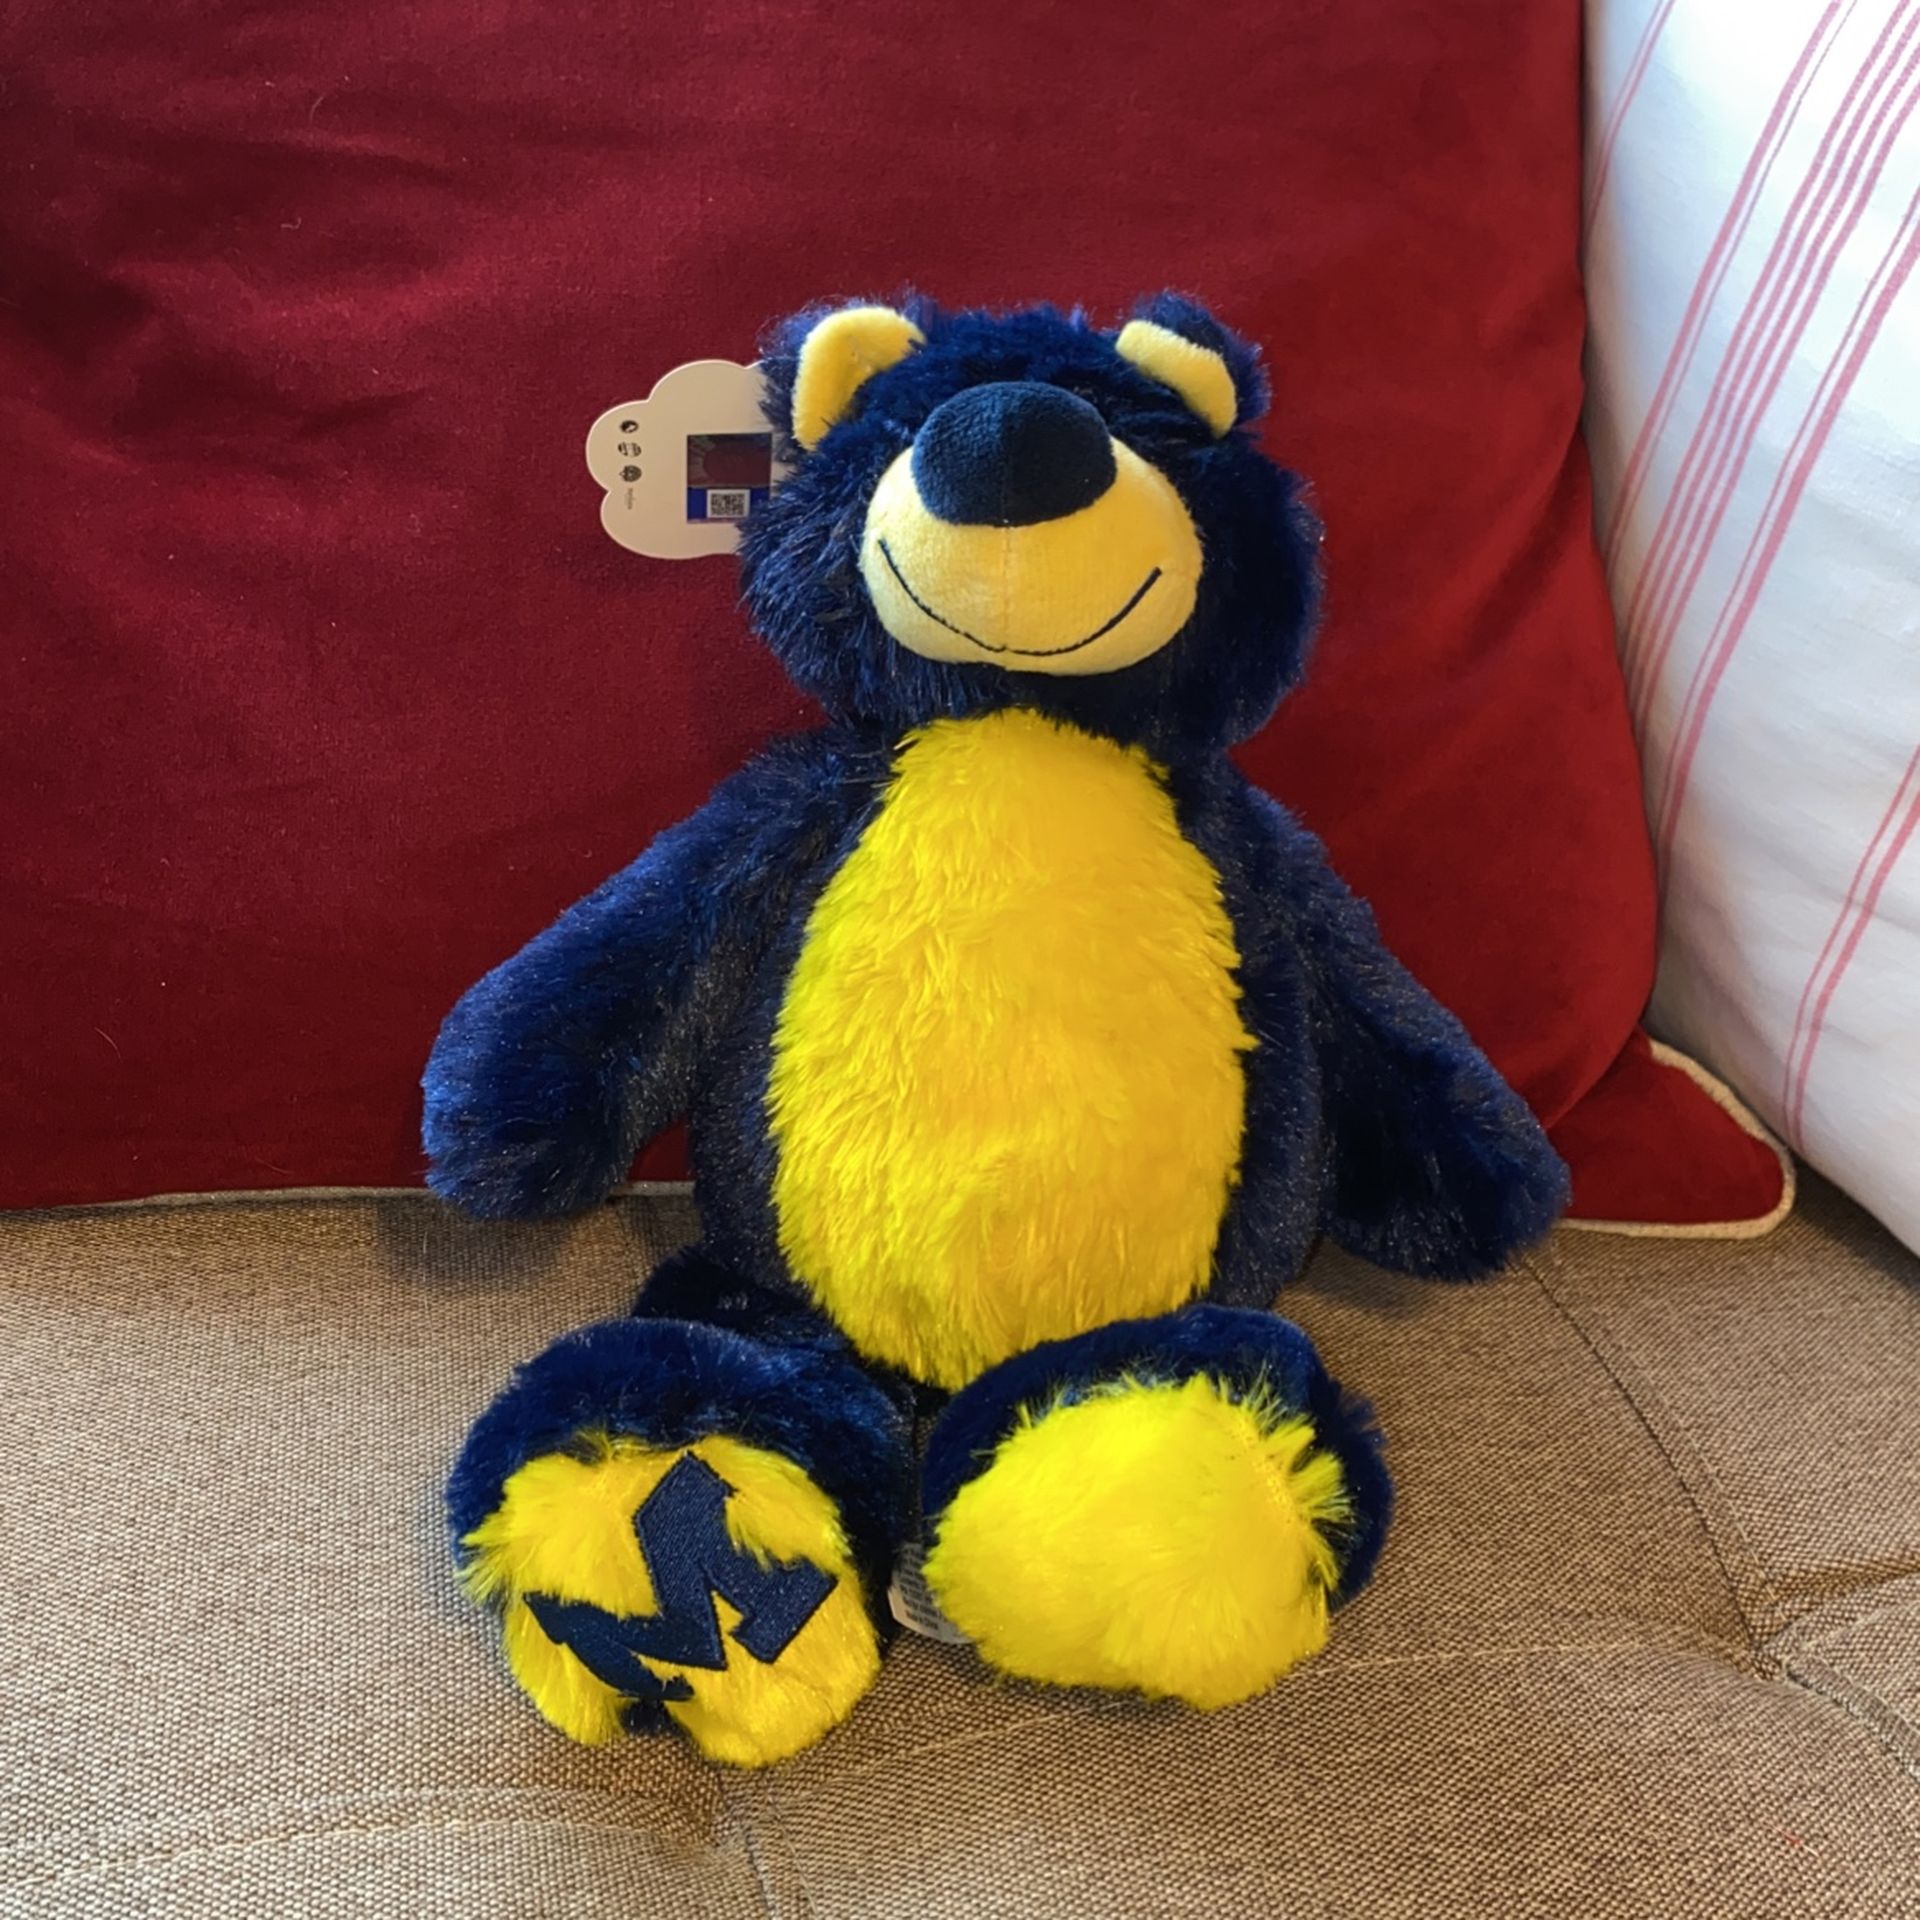 Michigan Blue and Yellow Teddy Bear “Ziggy”